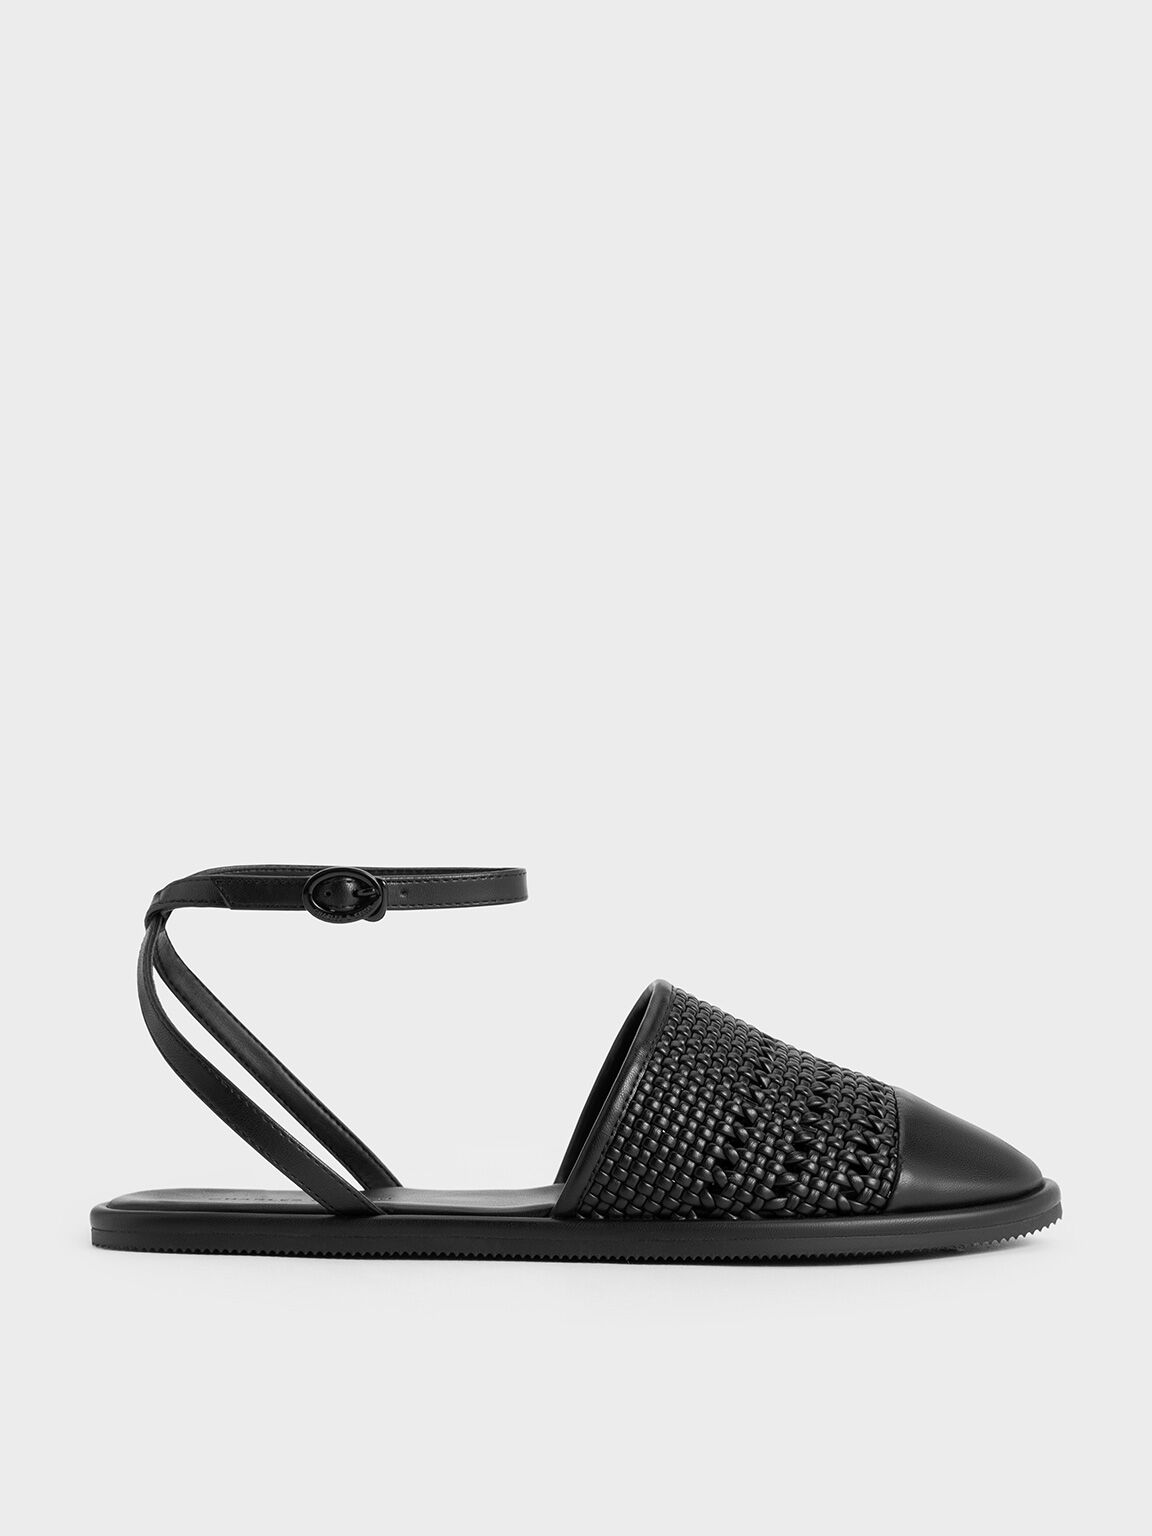 Woven Ankle-Strap Flats, Black, hi-res